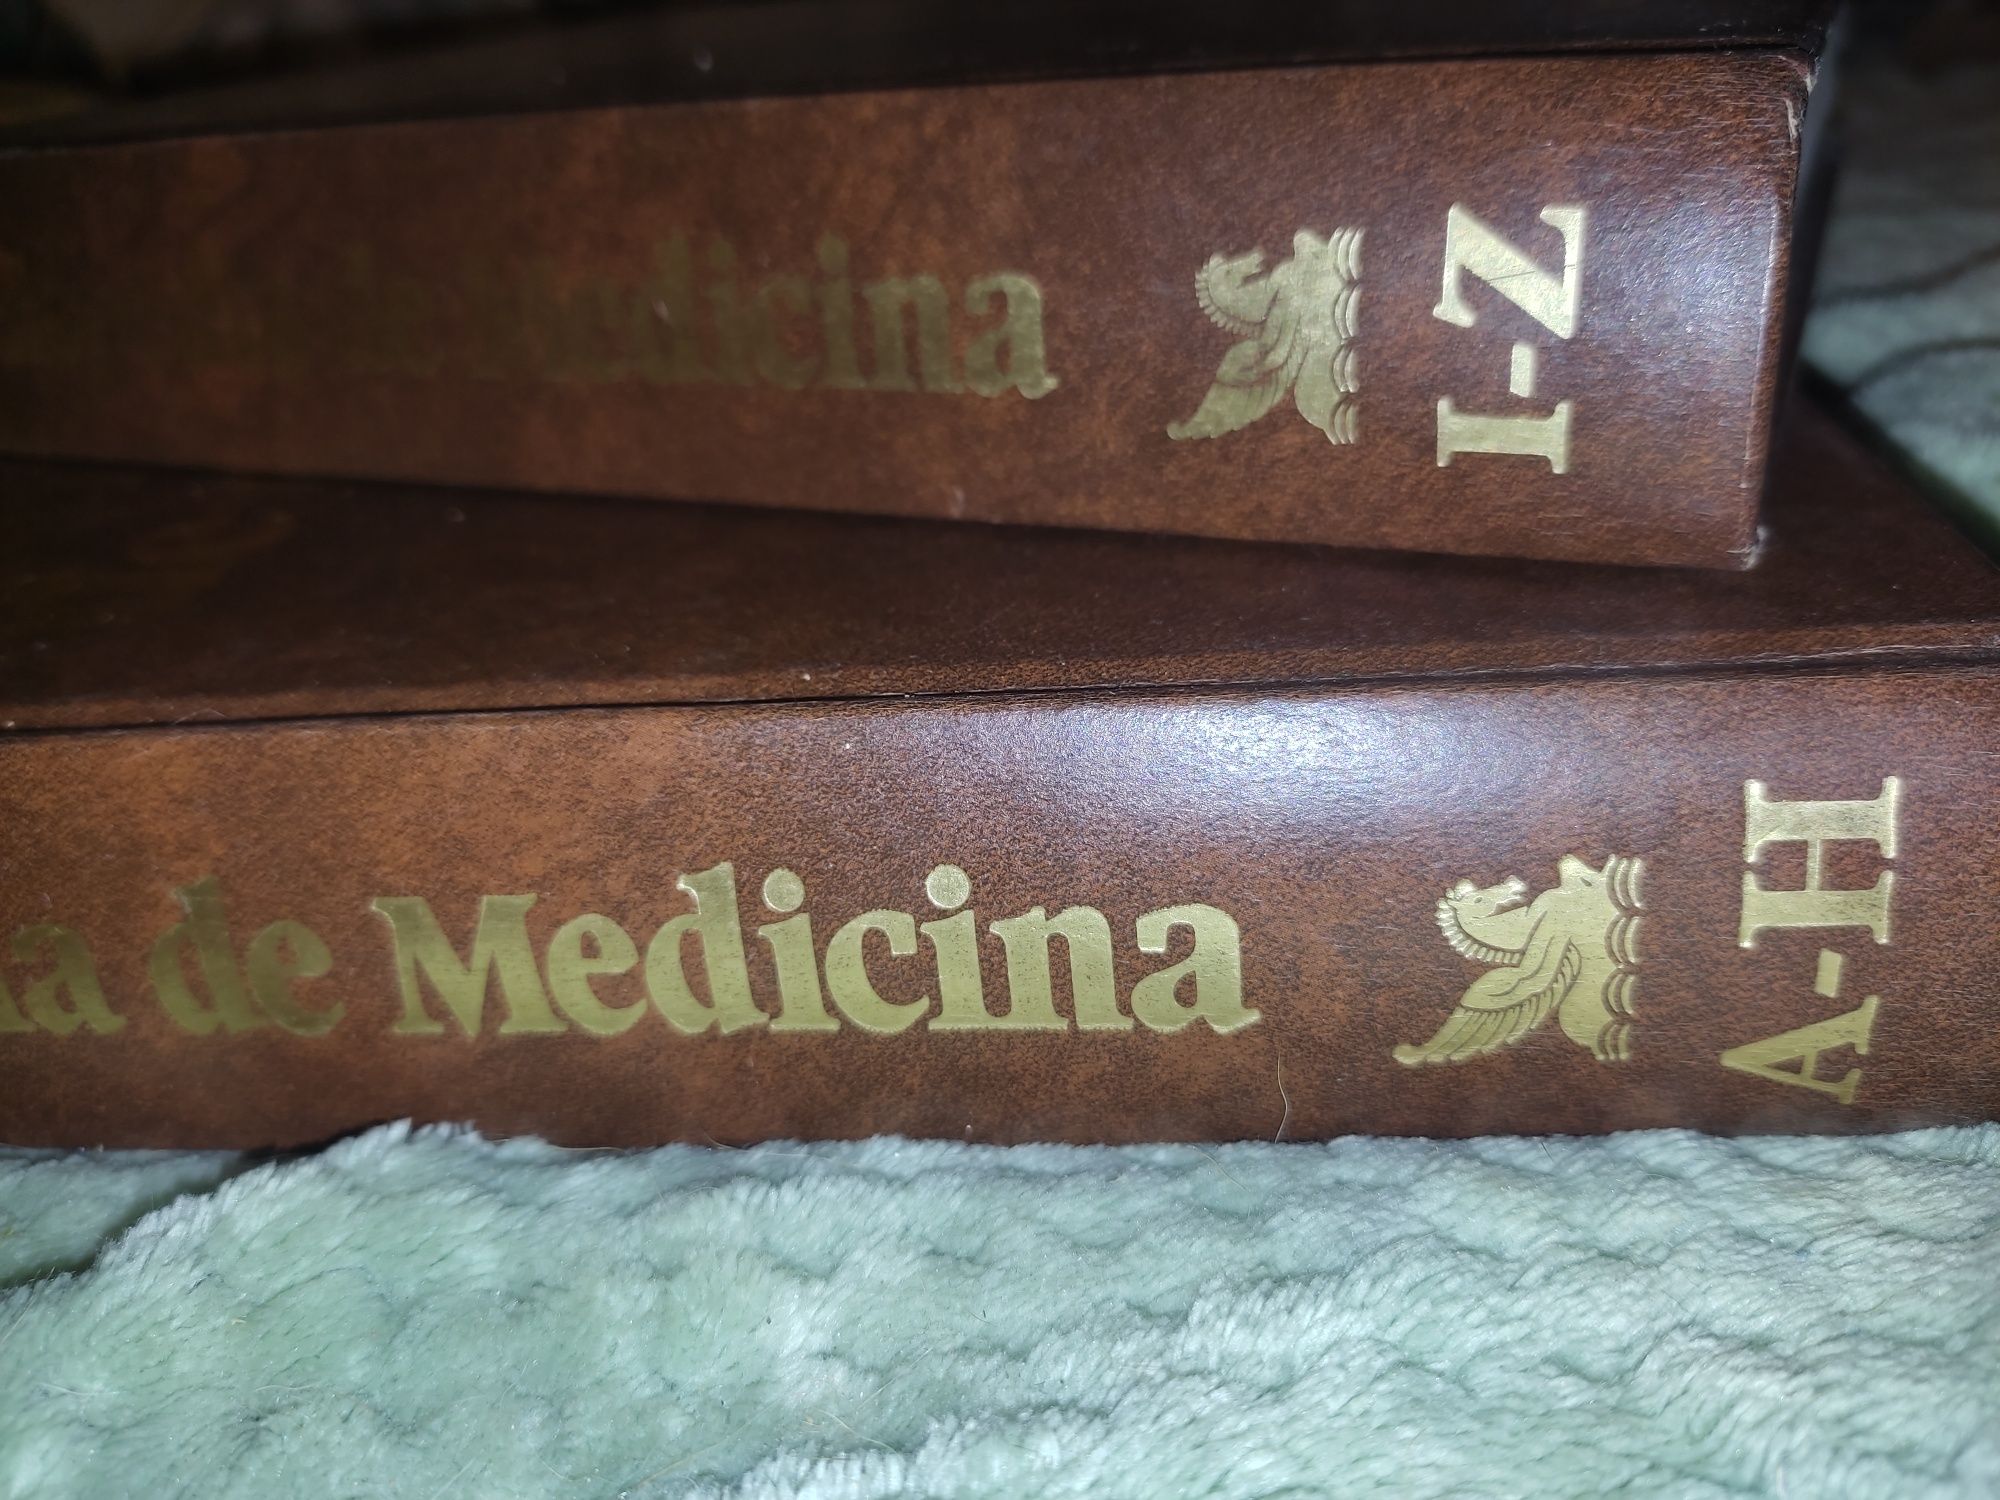 Enciclopédia de Medicina